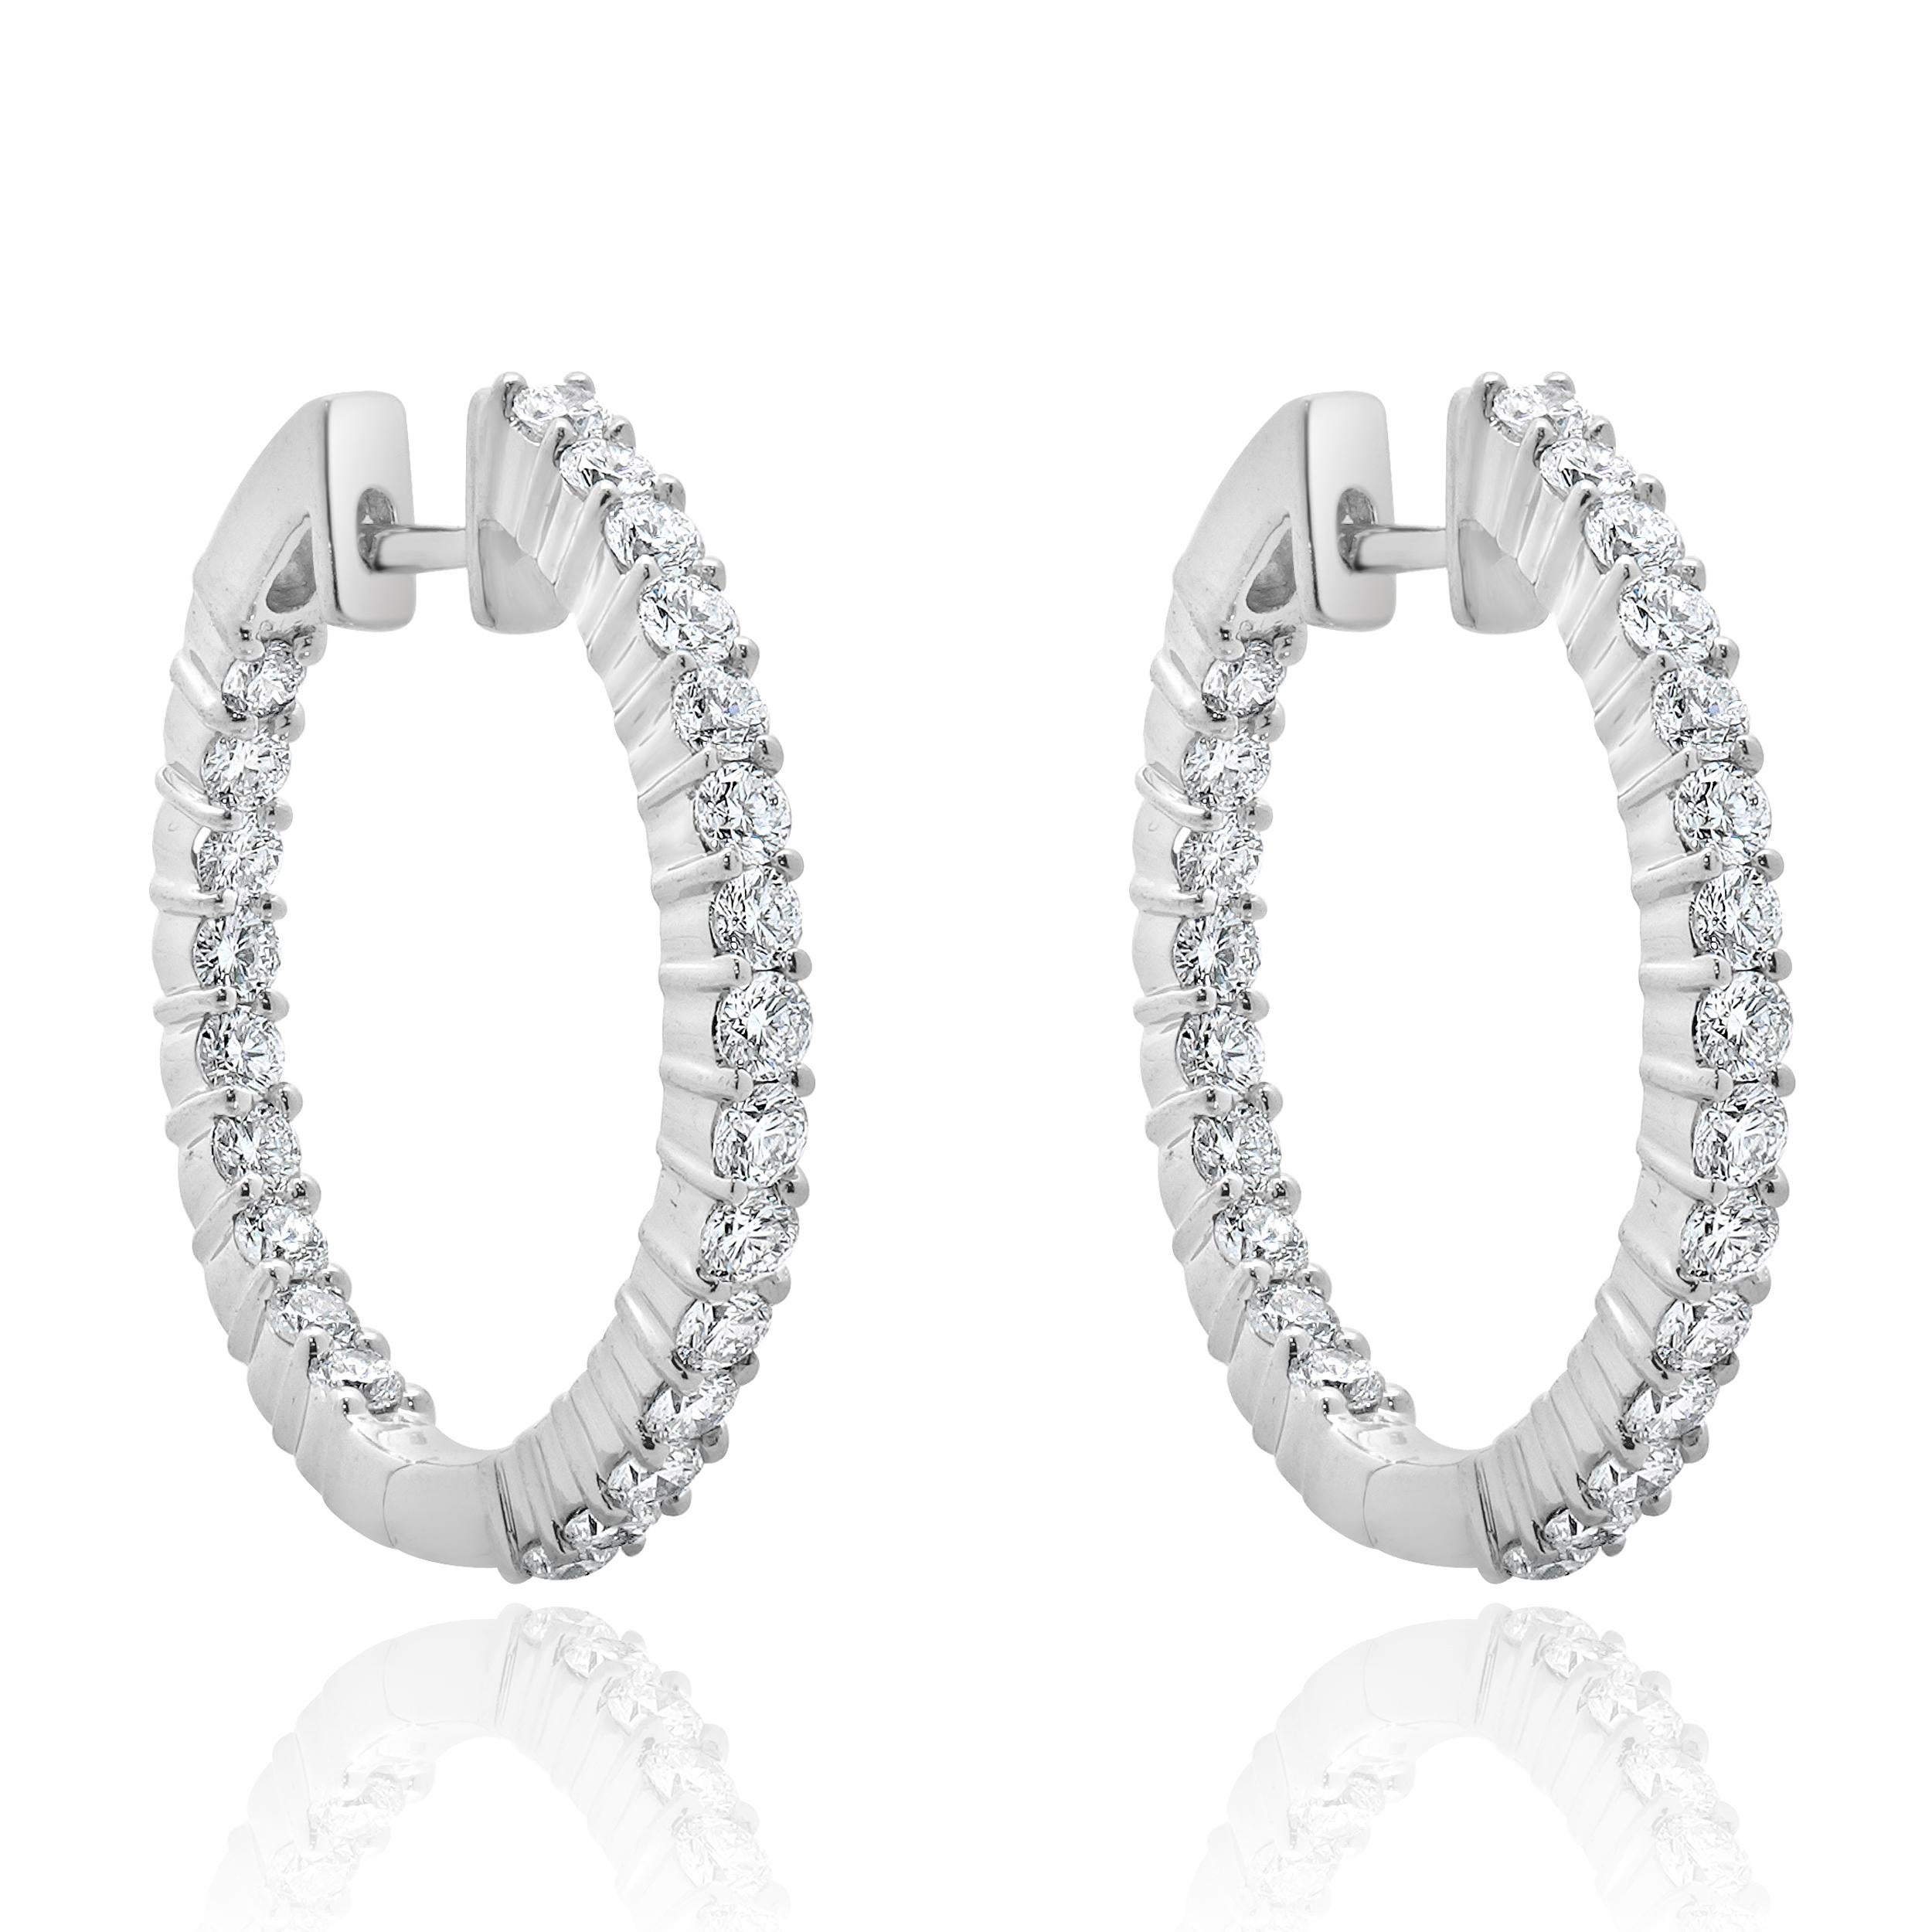 Designer: custom design
Material: 18K white gold
Diamonds: round brilliant cut = 1.75cttw
Color: G
Clarity: VS1-2
Dimensions: earrings measure 24mm in length
Weight: 8.12 grams
